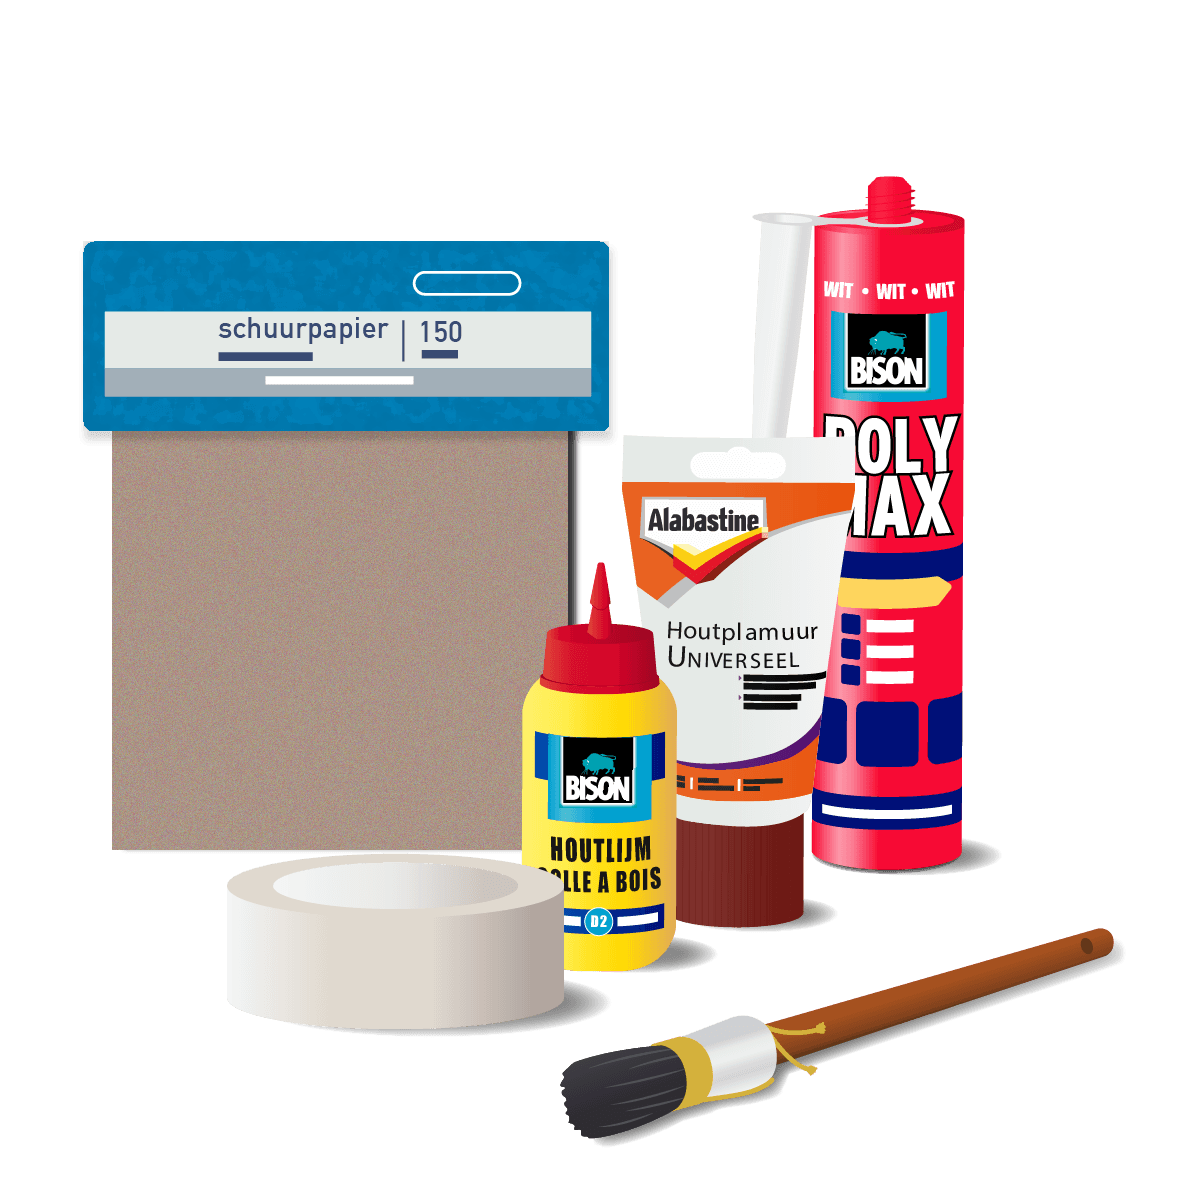 Tools, Hardware, Adhesives, sealants and paints